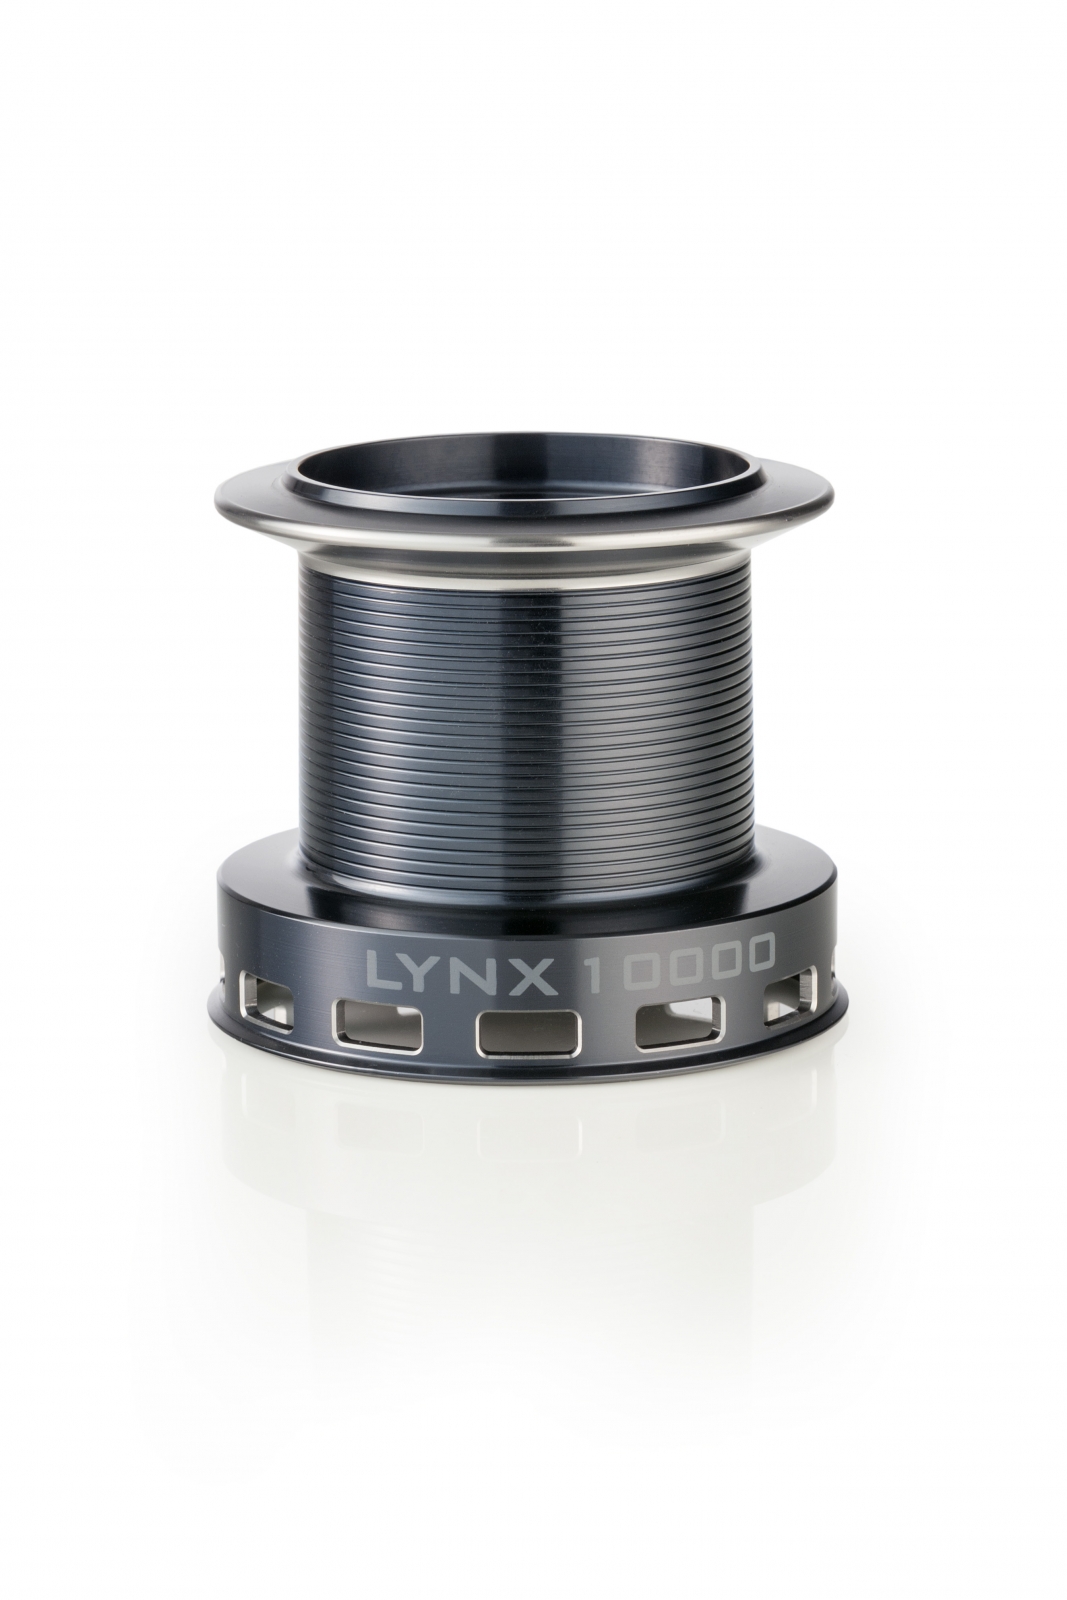 Europe Shop Mivardi MIV-RLYNXS100 Spare spool for Lynx 10000